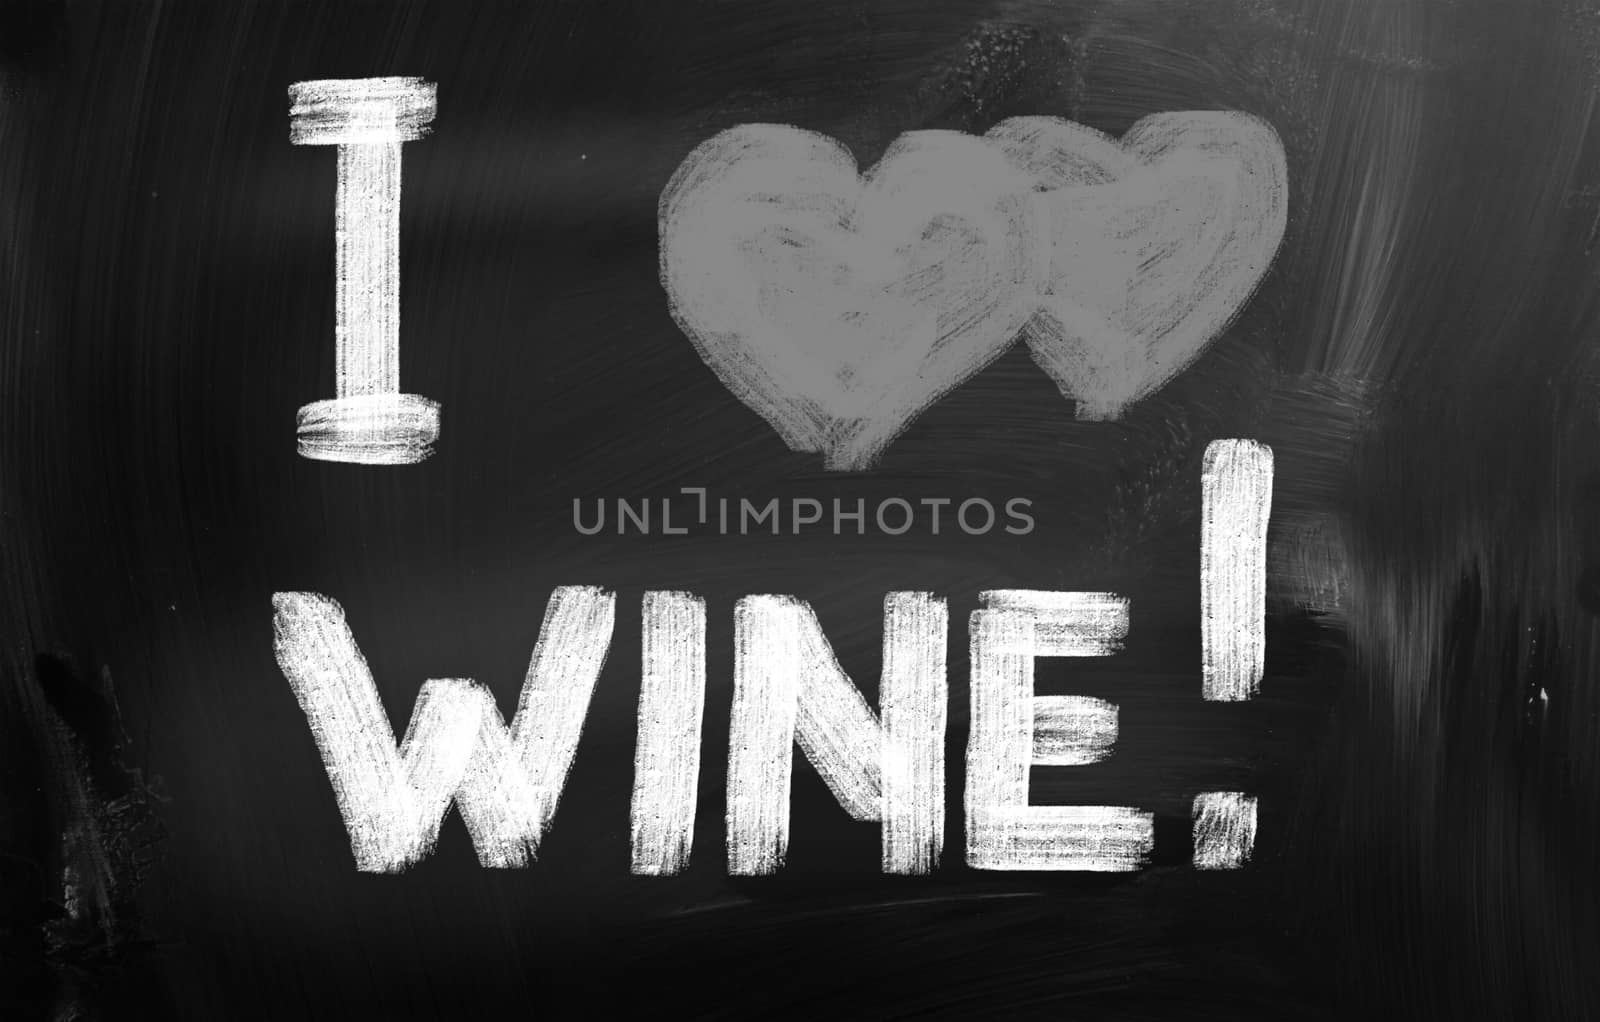 I Love Wine Concept